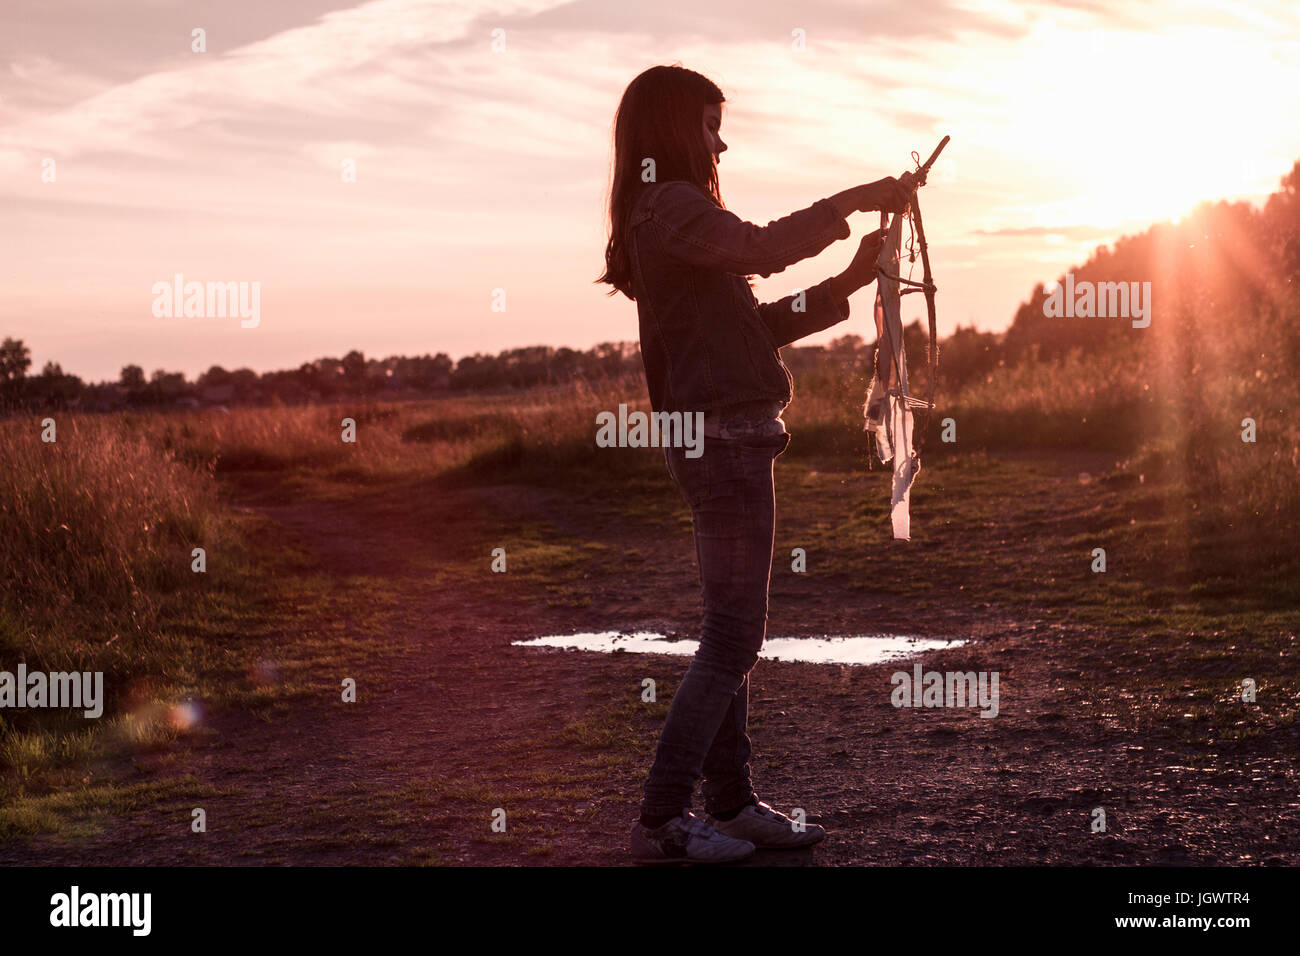 Teenage girl preparing kite on dirt track at sunset Stock Photo